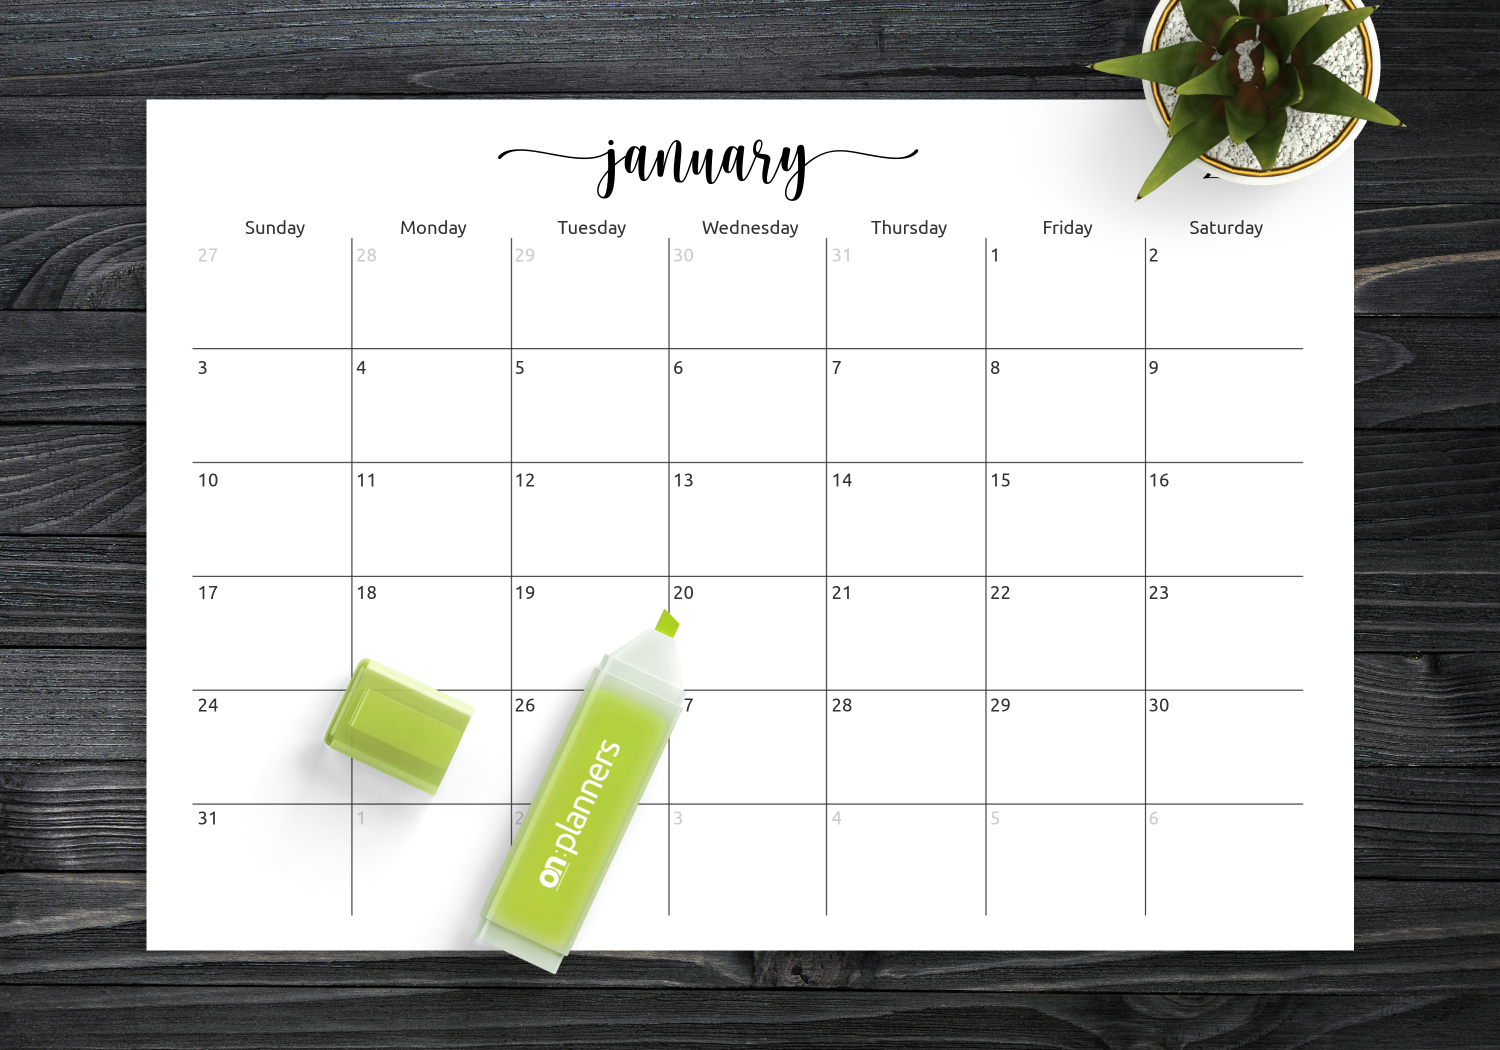 blank monthly calendars to print blank calendar month view calendar